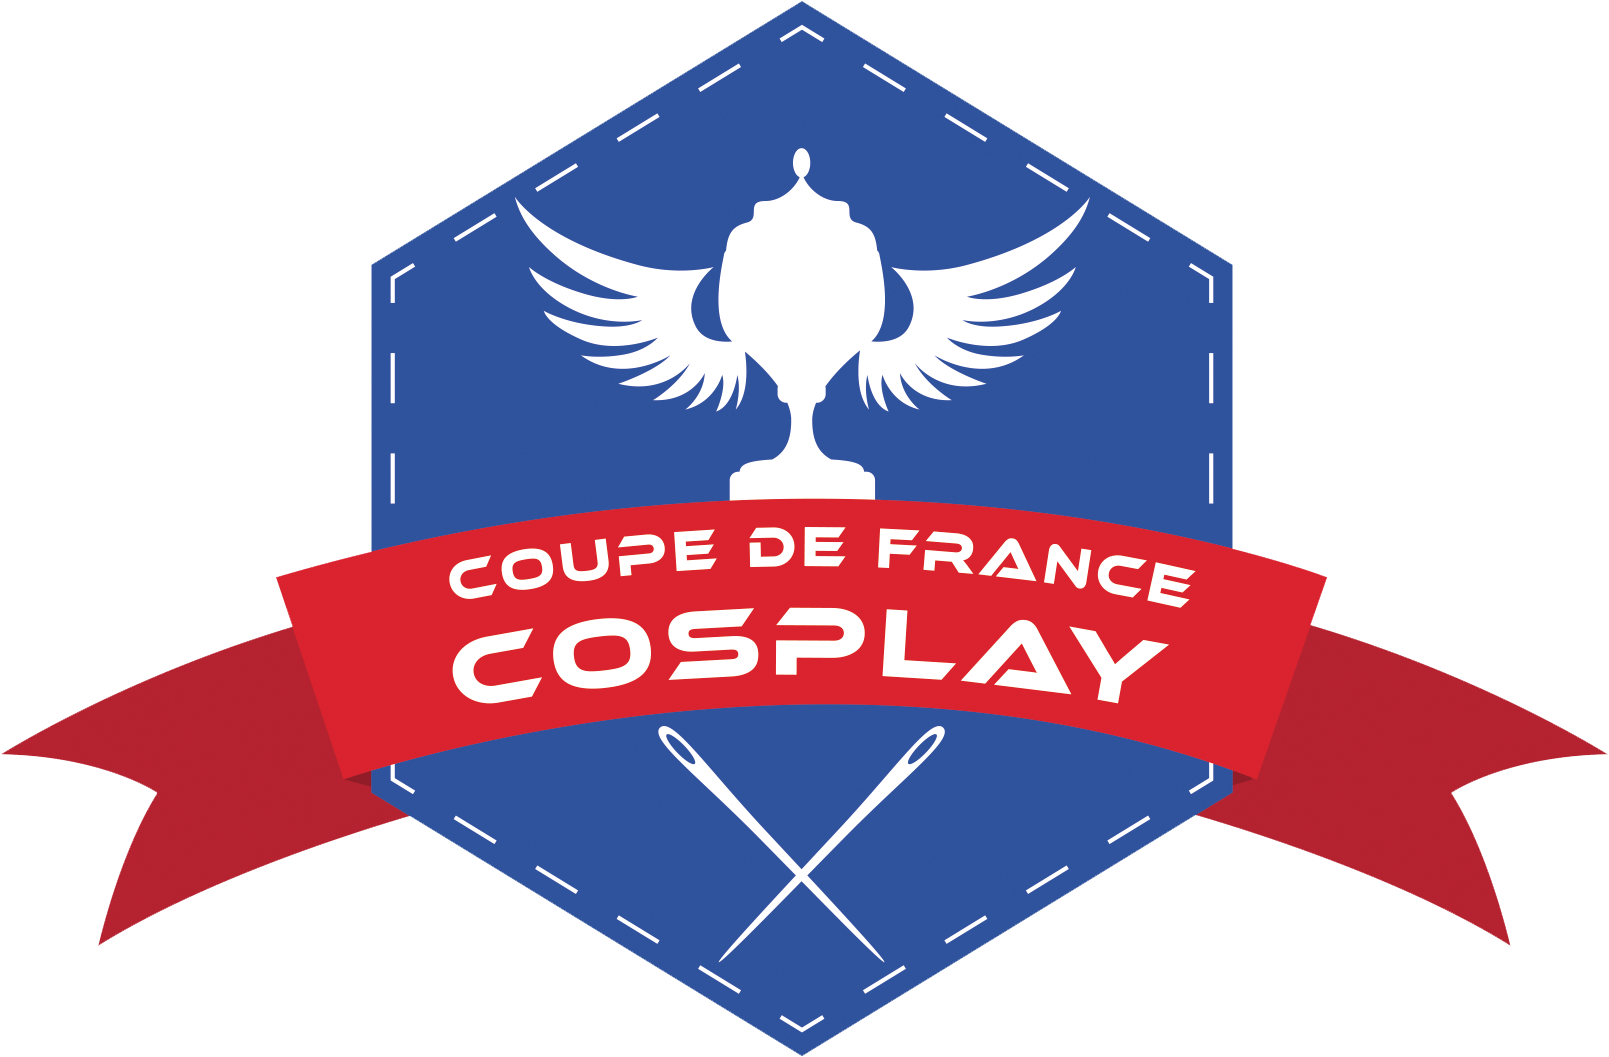 Coupe de France de Cosplay